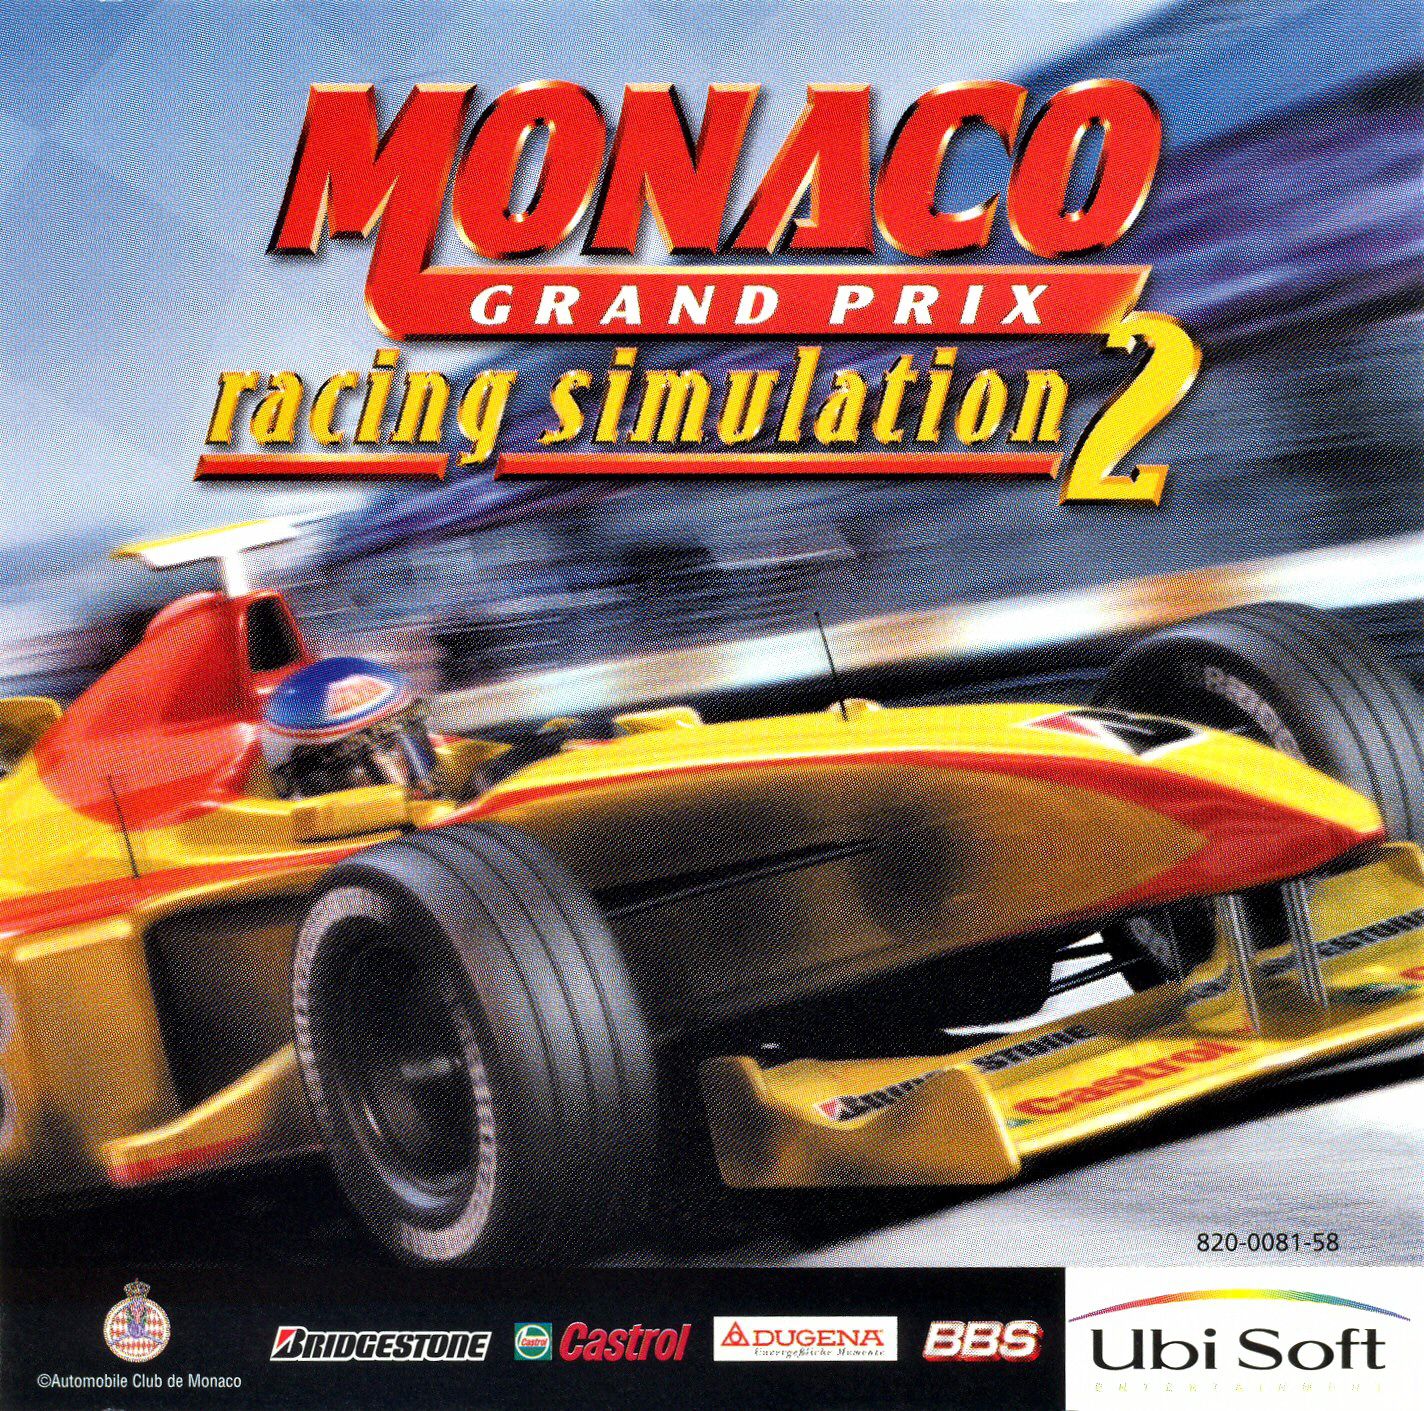 Monaco Grand Prix racing simulation 2